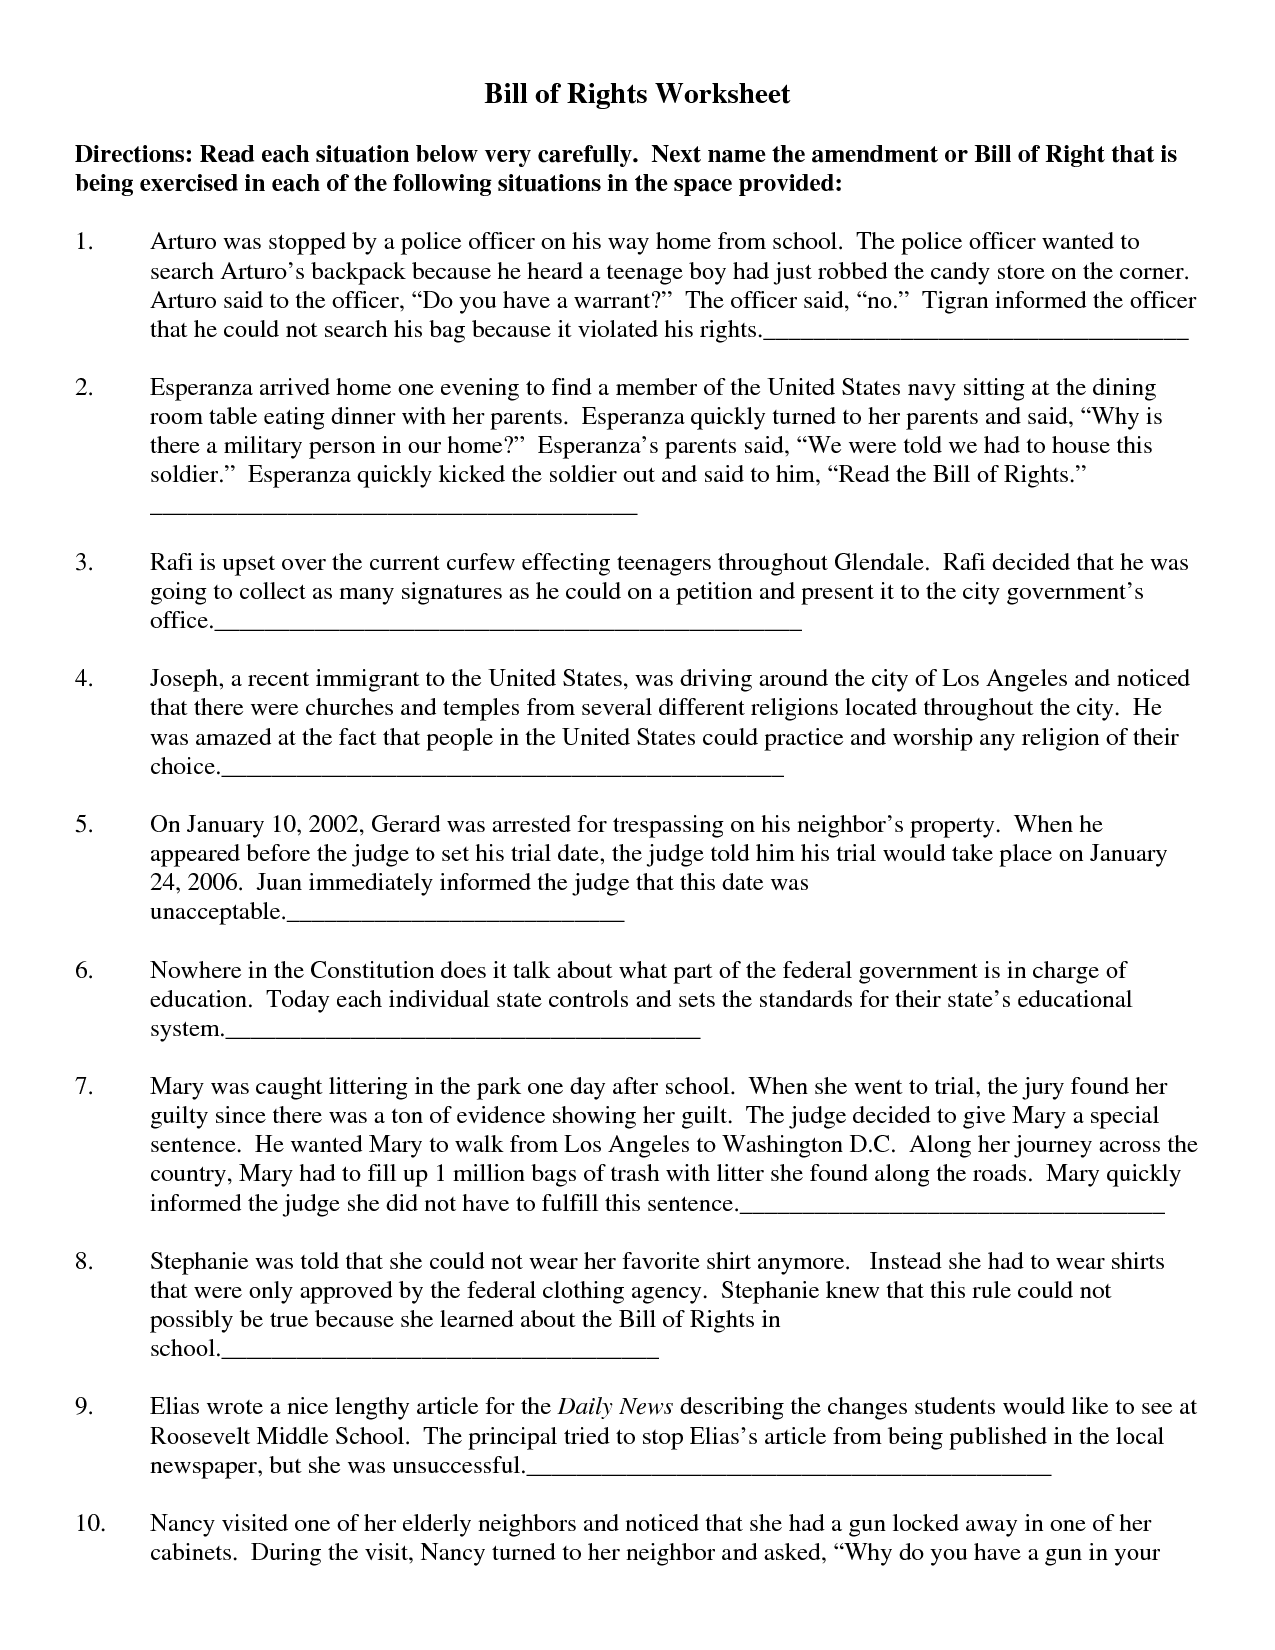 Bill of Rights Worksheet.pdf Image